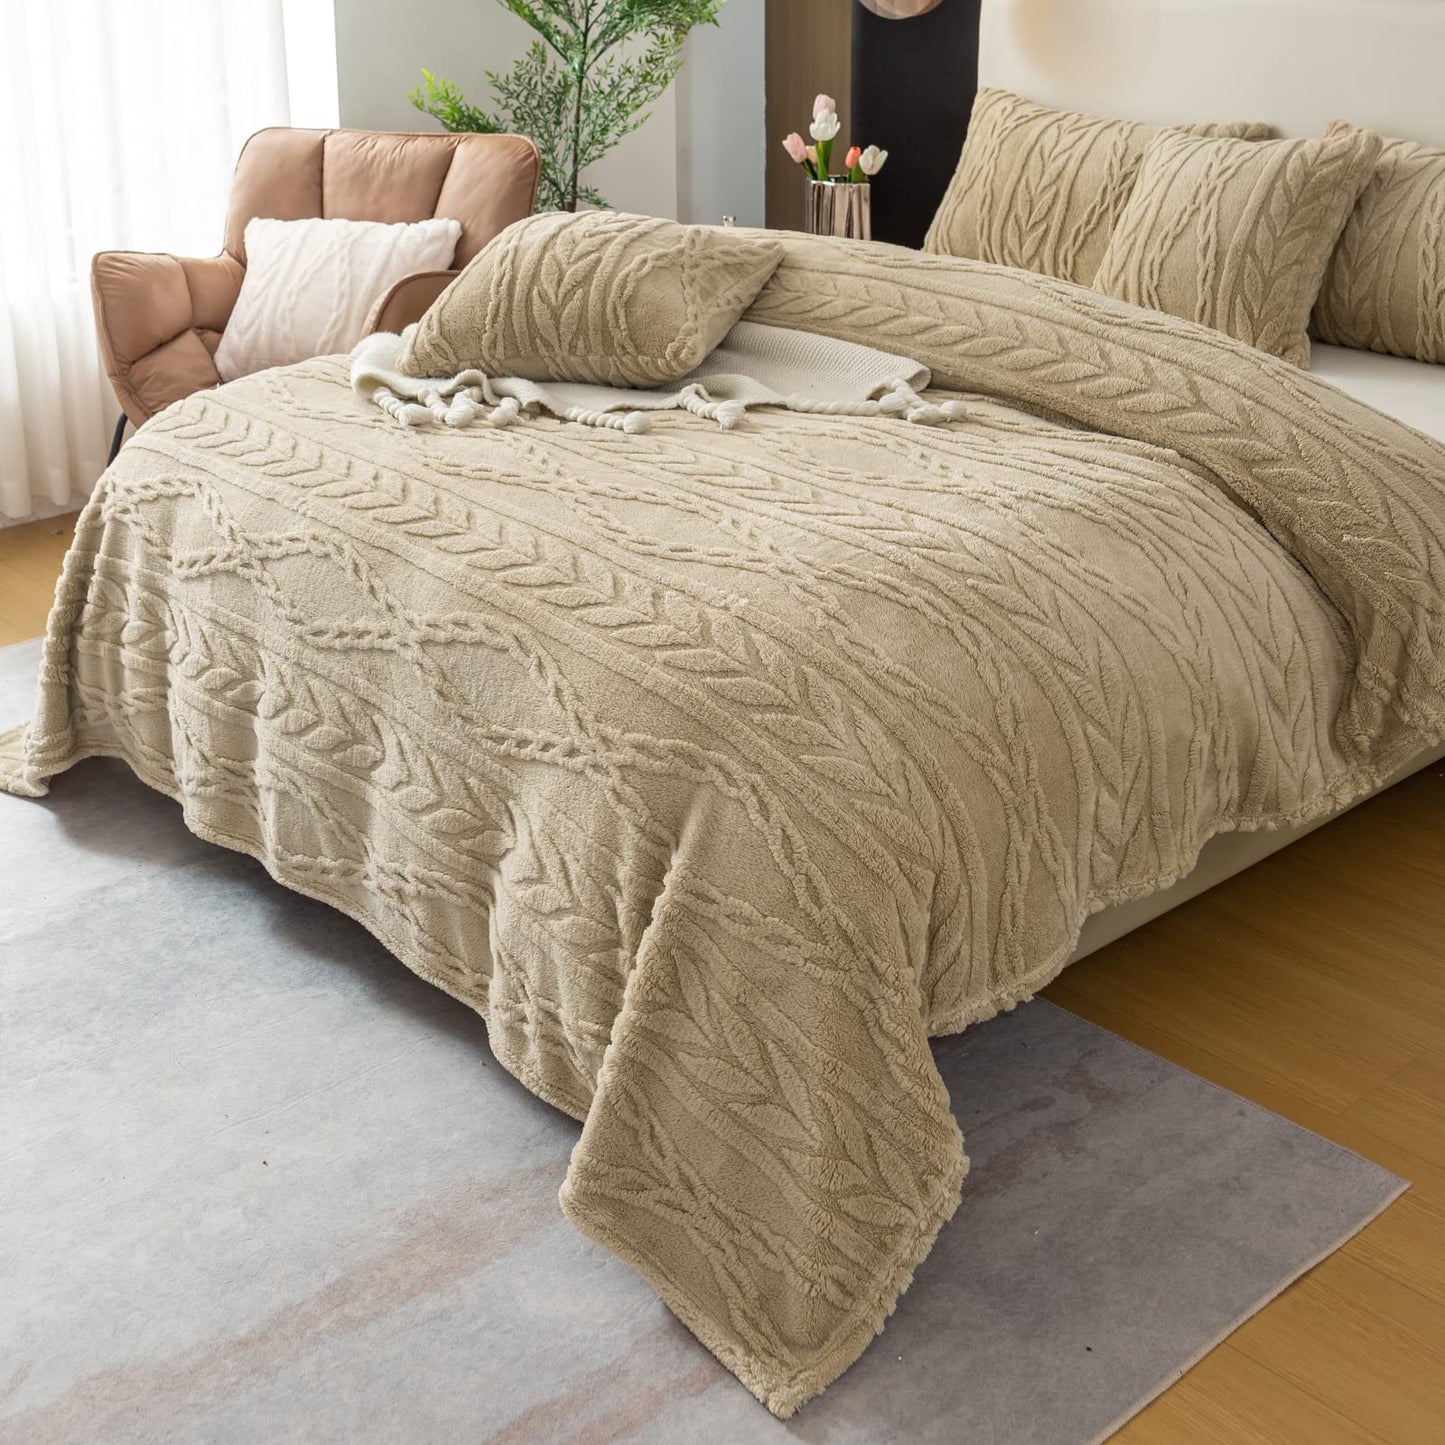 YUSOKI Sherpa Throw Blanket-3D Stylish Design Super Soft Fuzzy Cozy Warm Blanket Thick Plush Fluffy Furry Blankets for Teen Girls Women Couch Bed Sofa Chair Men Boys Gift(Tan,50"x65")